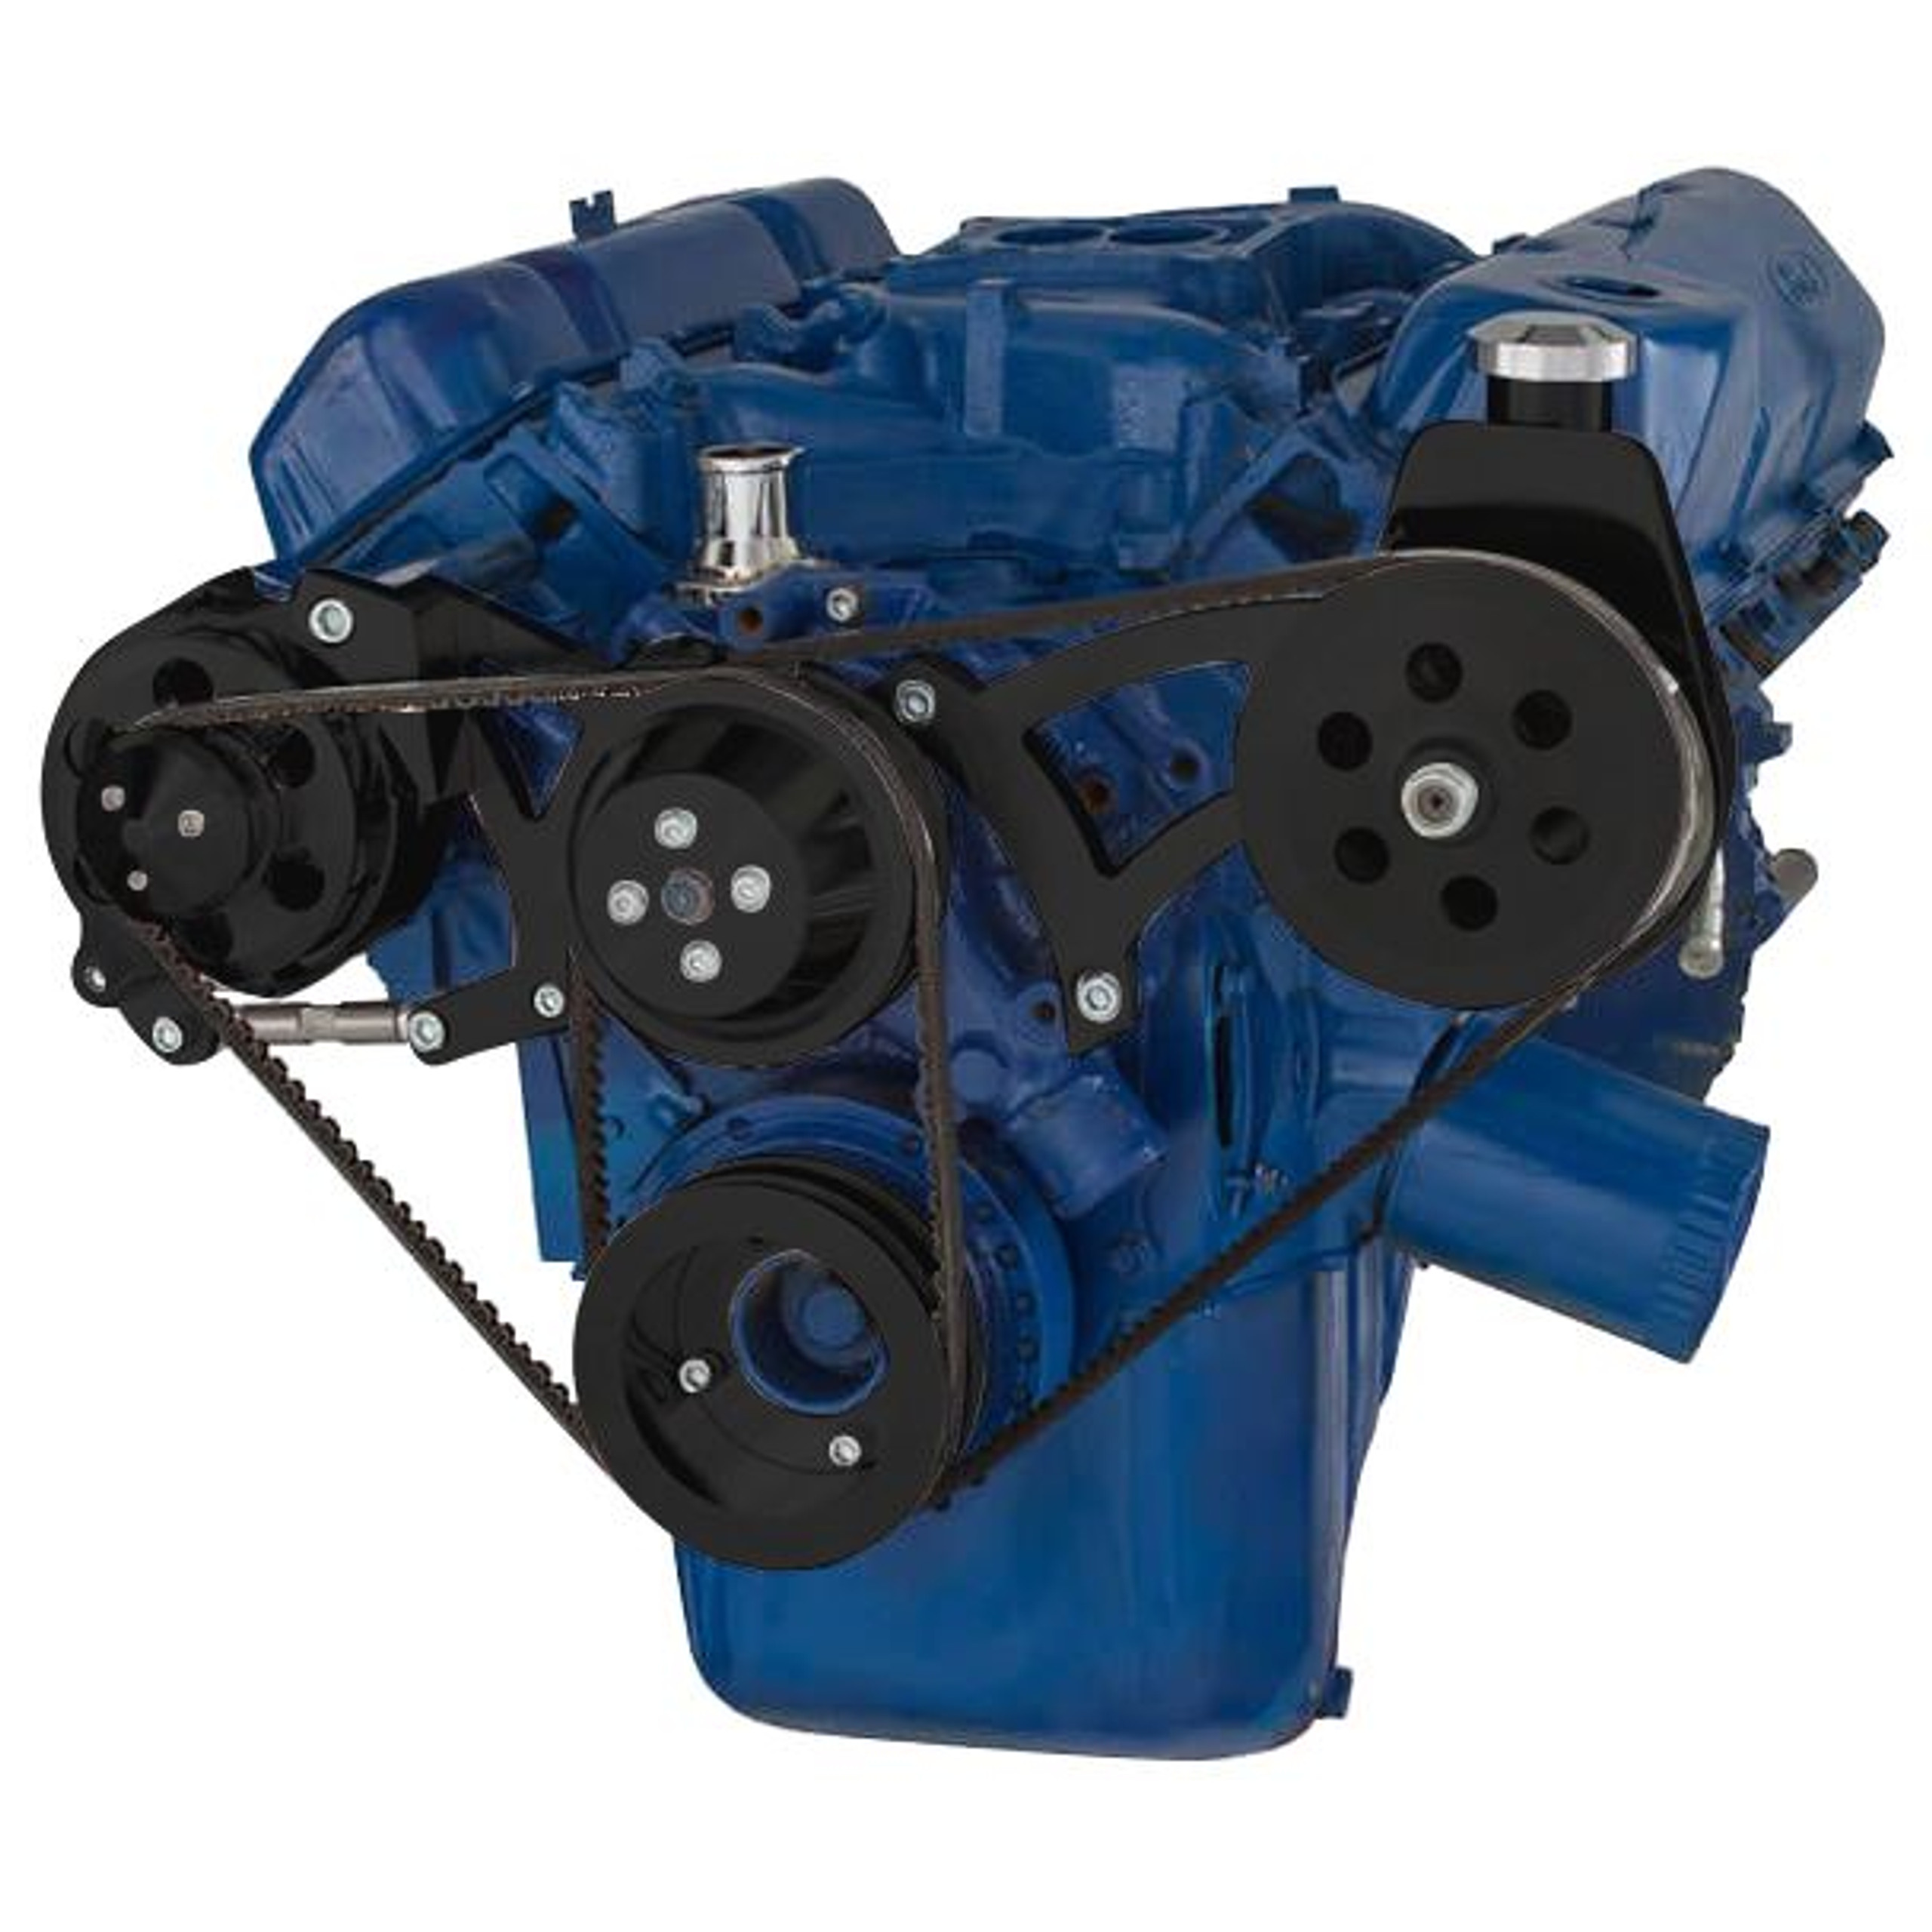 Ford 351 Windsor 345 HP Turn Key High Performance Balanced Crate Engine - Five Star Engines